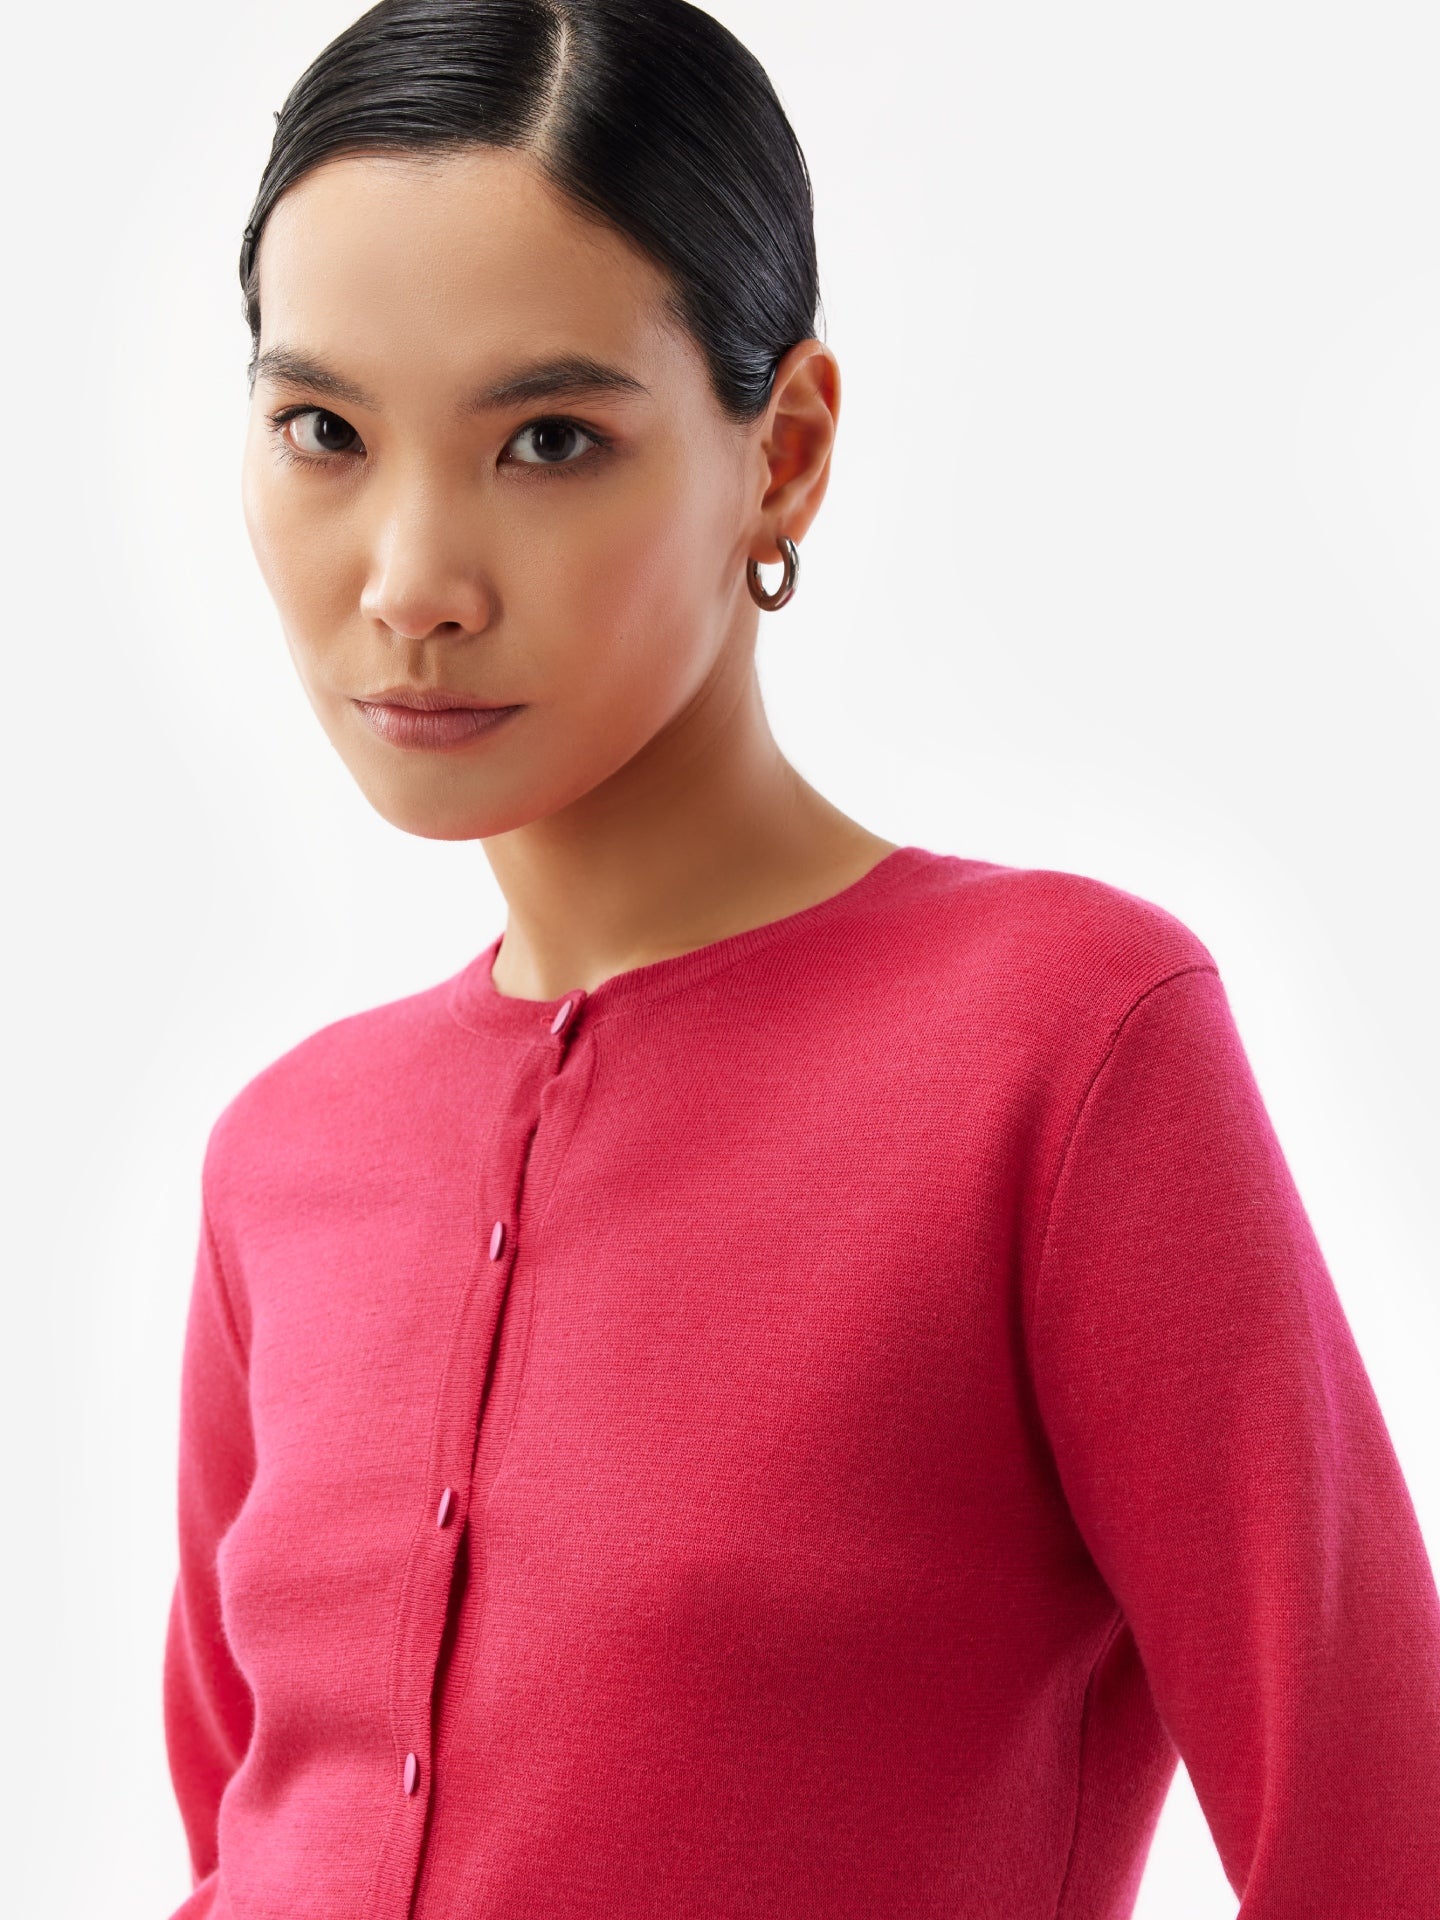 Women's Silk Cashmere Cropped Cardigan Pink - Gobi Cashmere